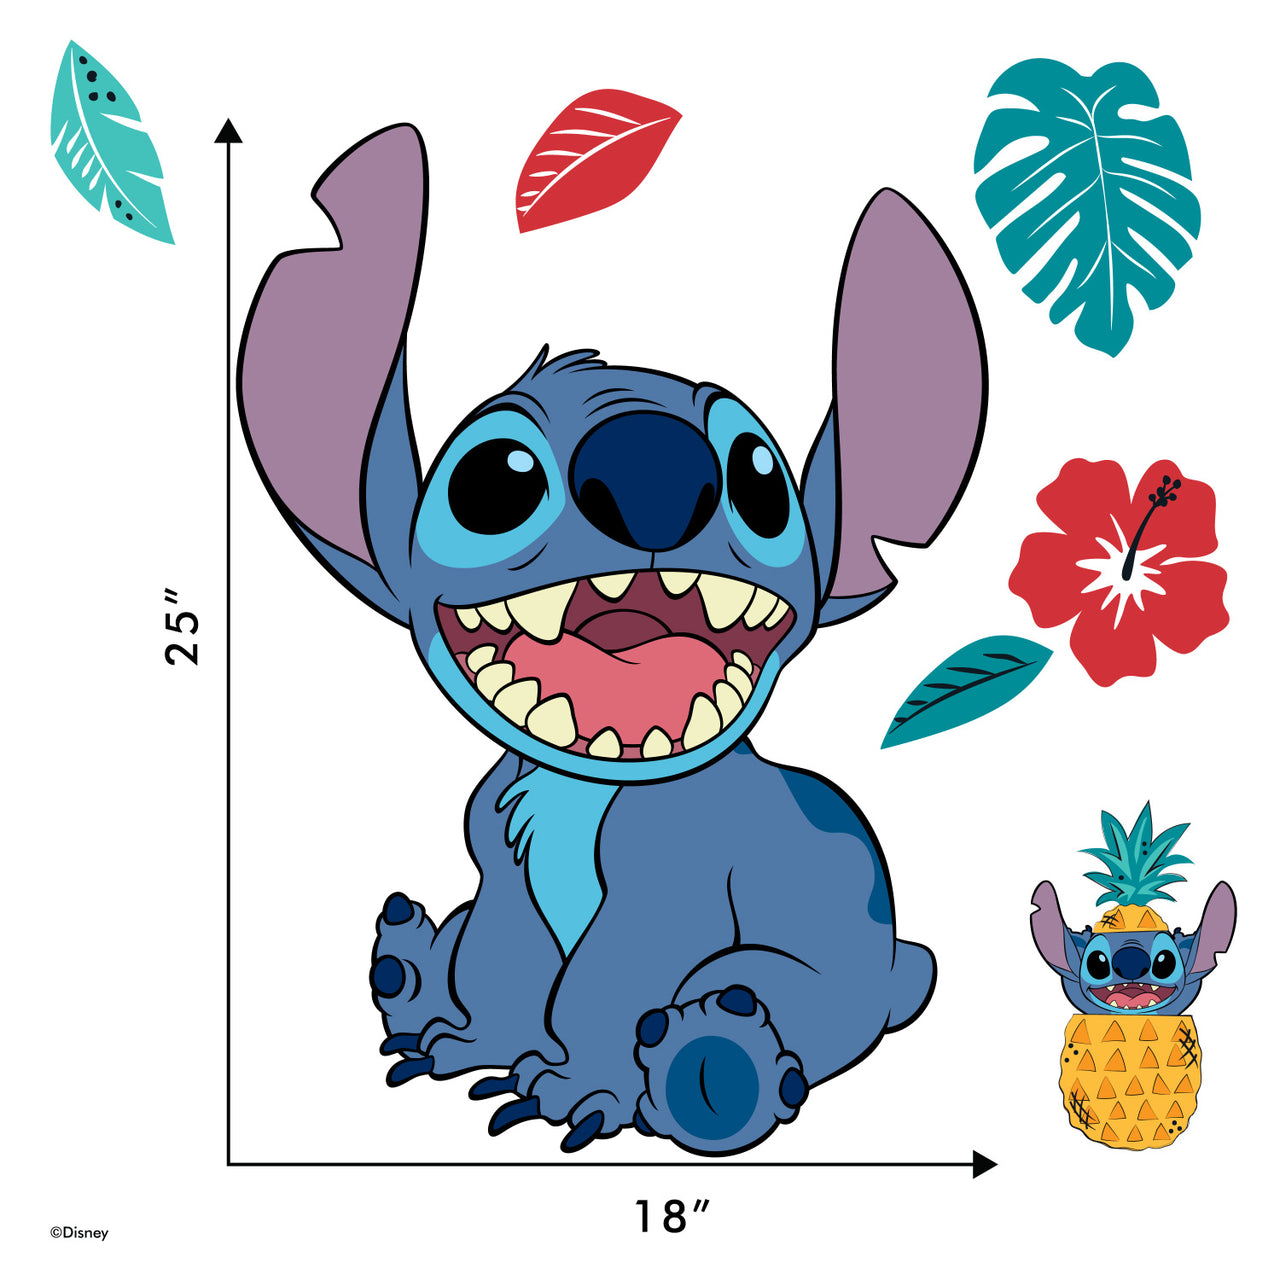 Decalcomania Disney Lilo & Stitch Augmented Reality Wall Decal